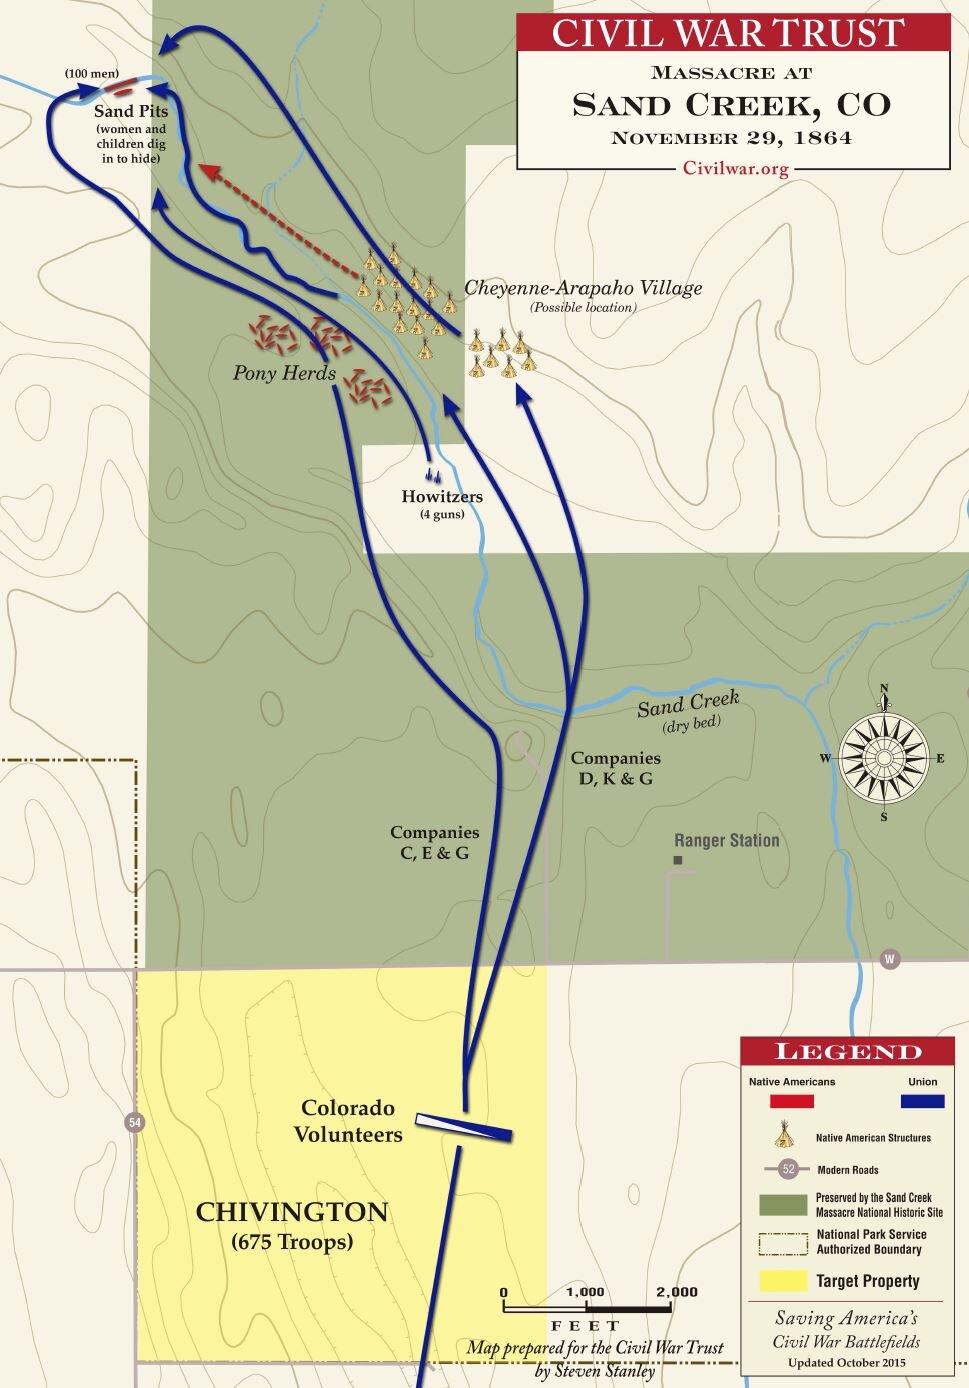 American Battlefield Trust’s map of the Battle of Sand Creek